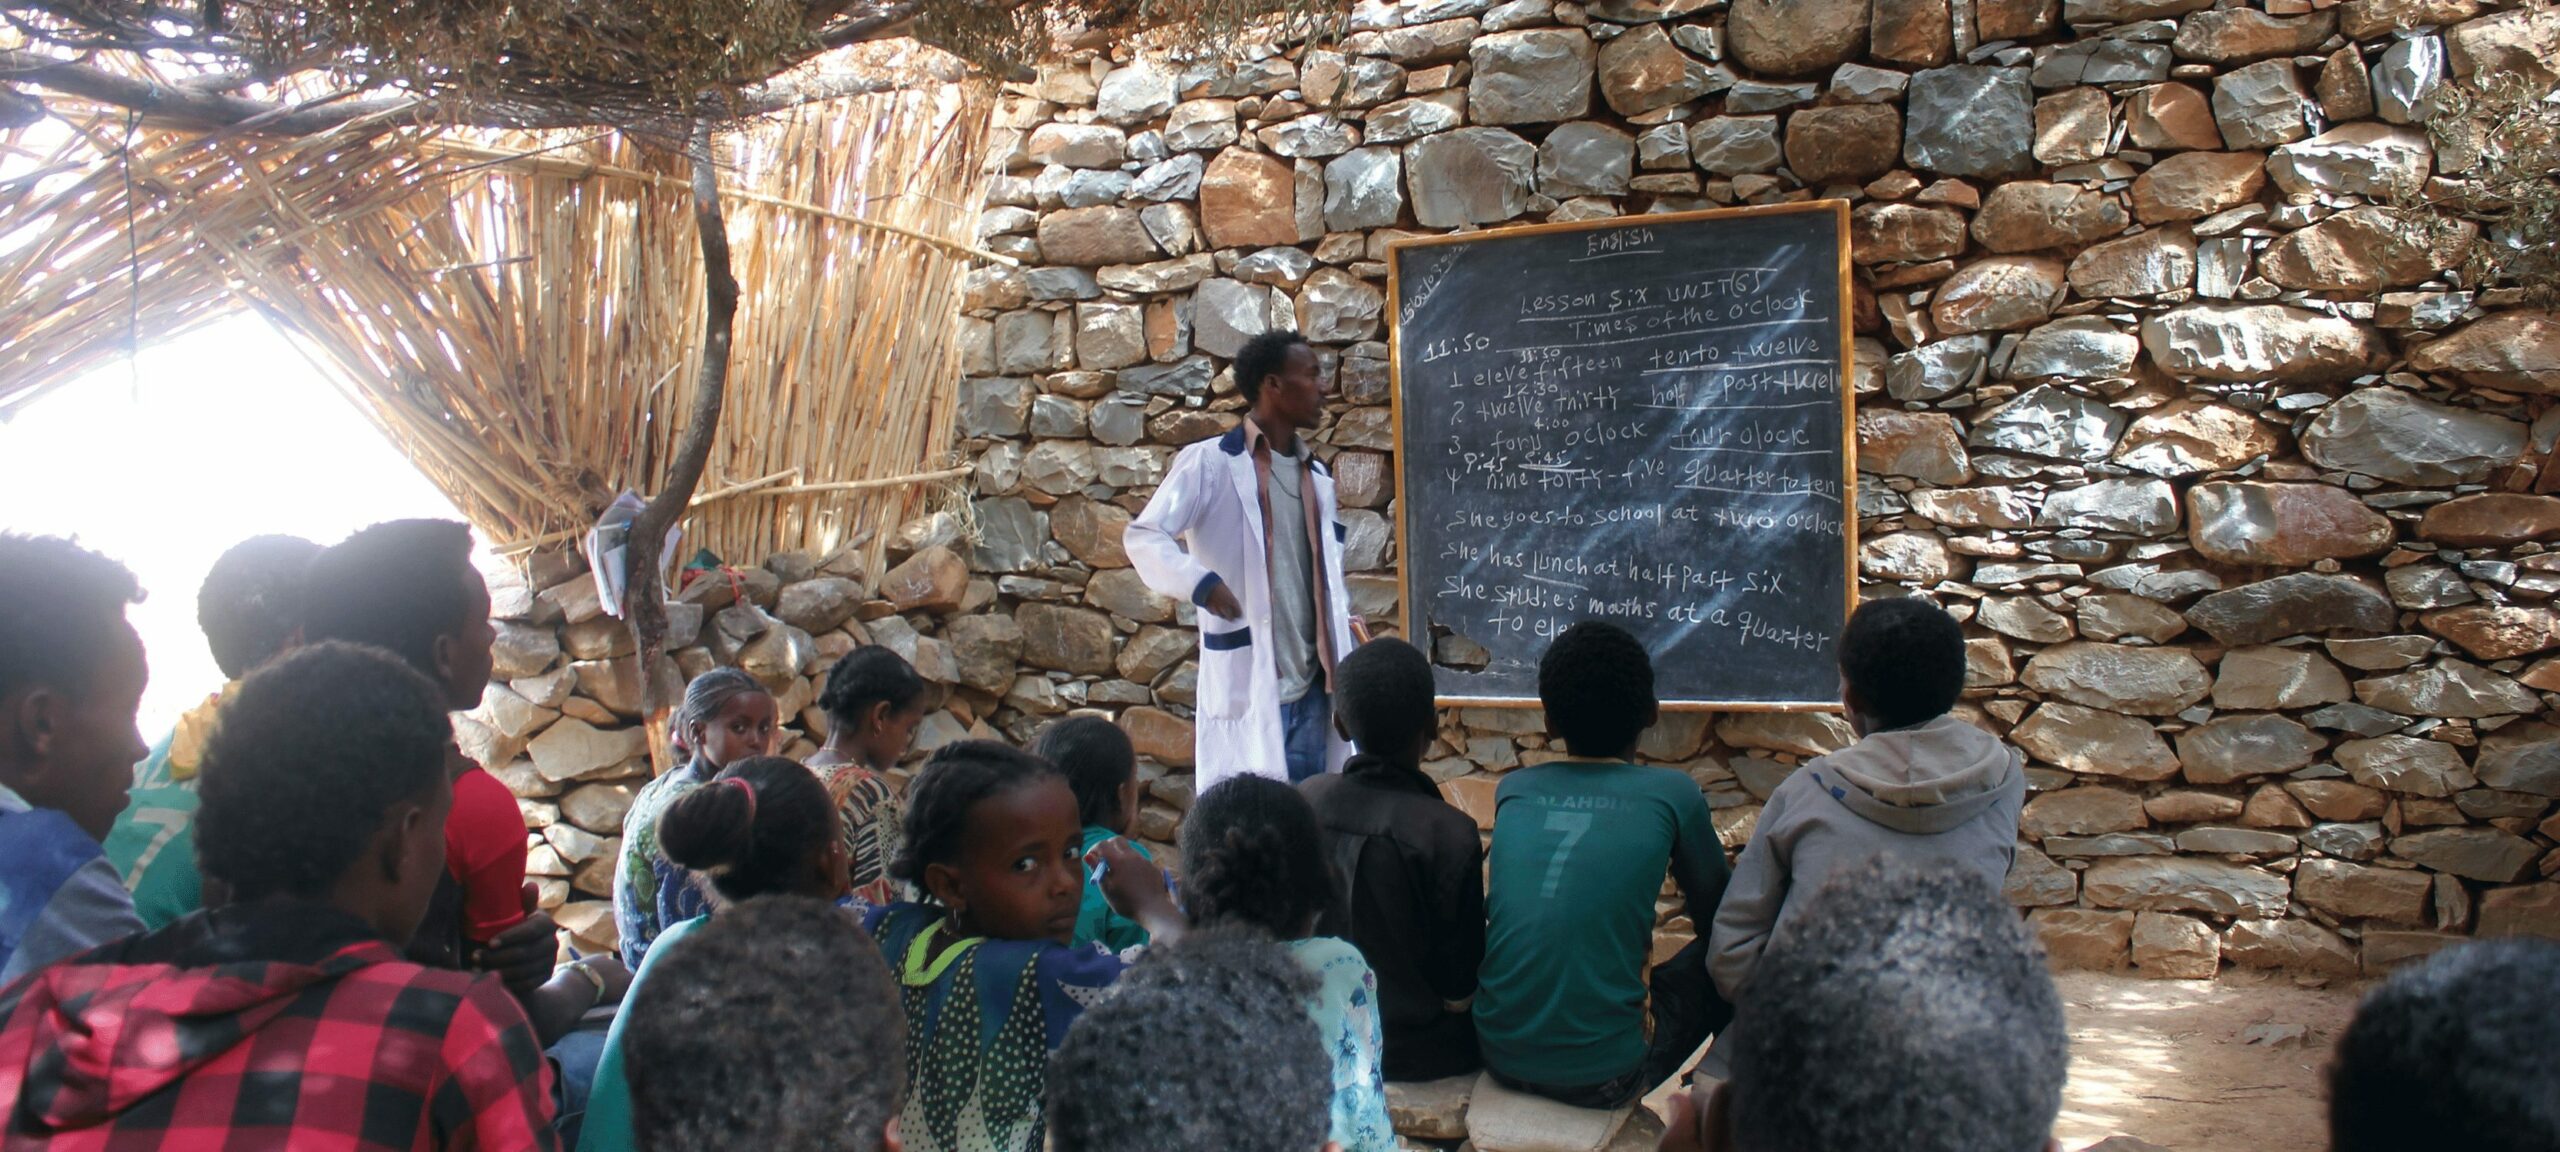 A teacher educating children in his open-air classroom.